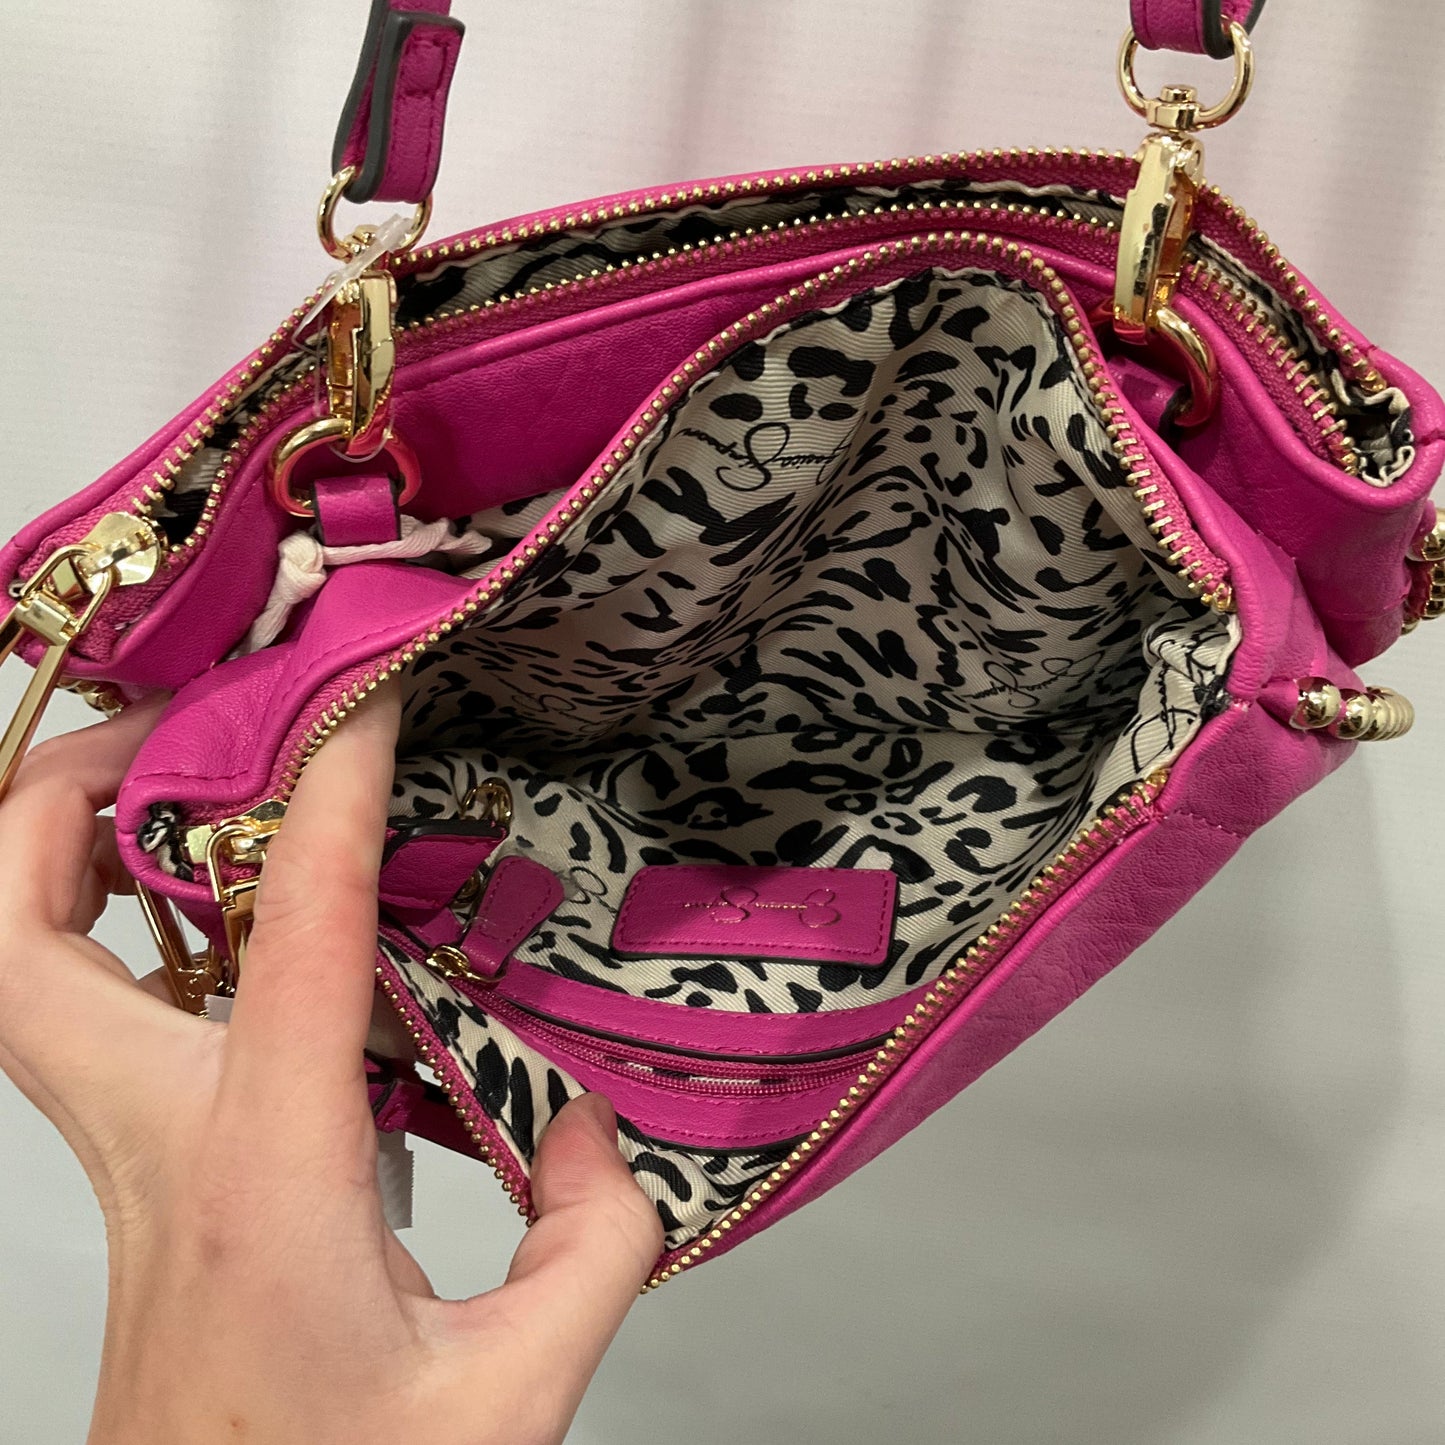 Handbag Jessica Simpson, Size Large